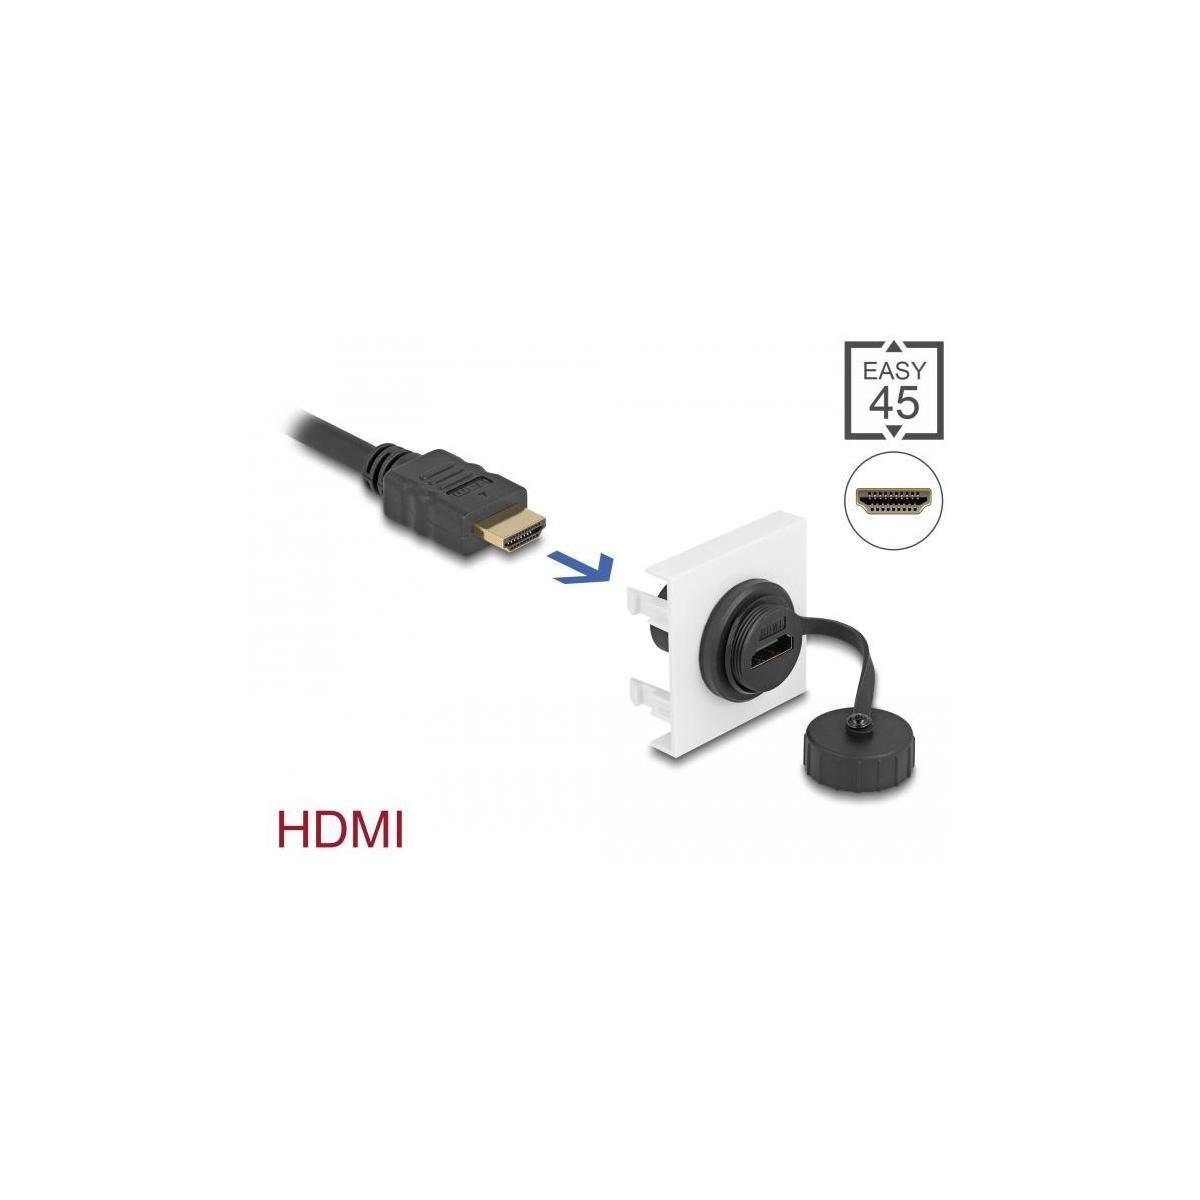 Delock Easy 45 HDMI Modul, 45 x 45 mm Computer-Kabel, HDMI-A, HDMI